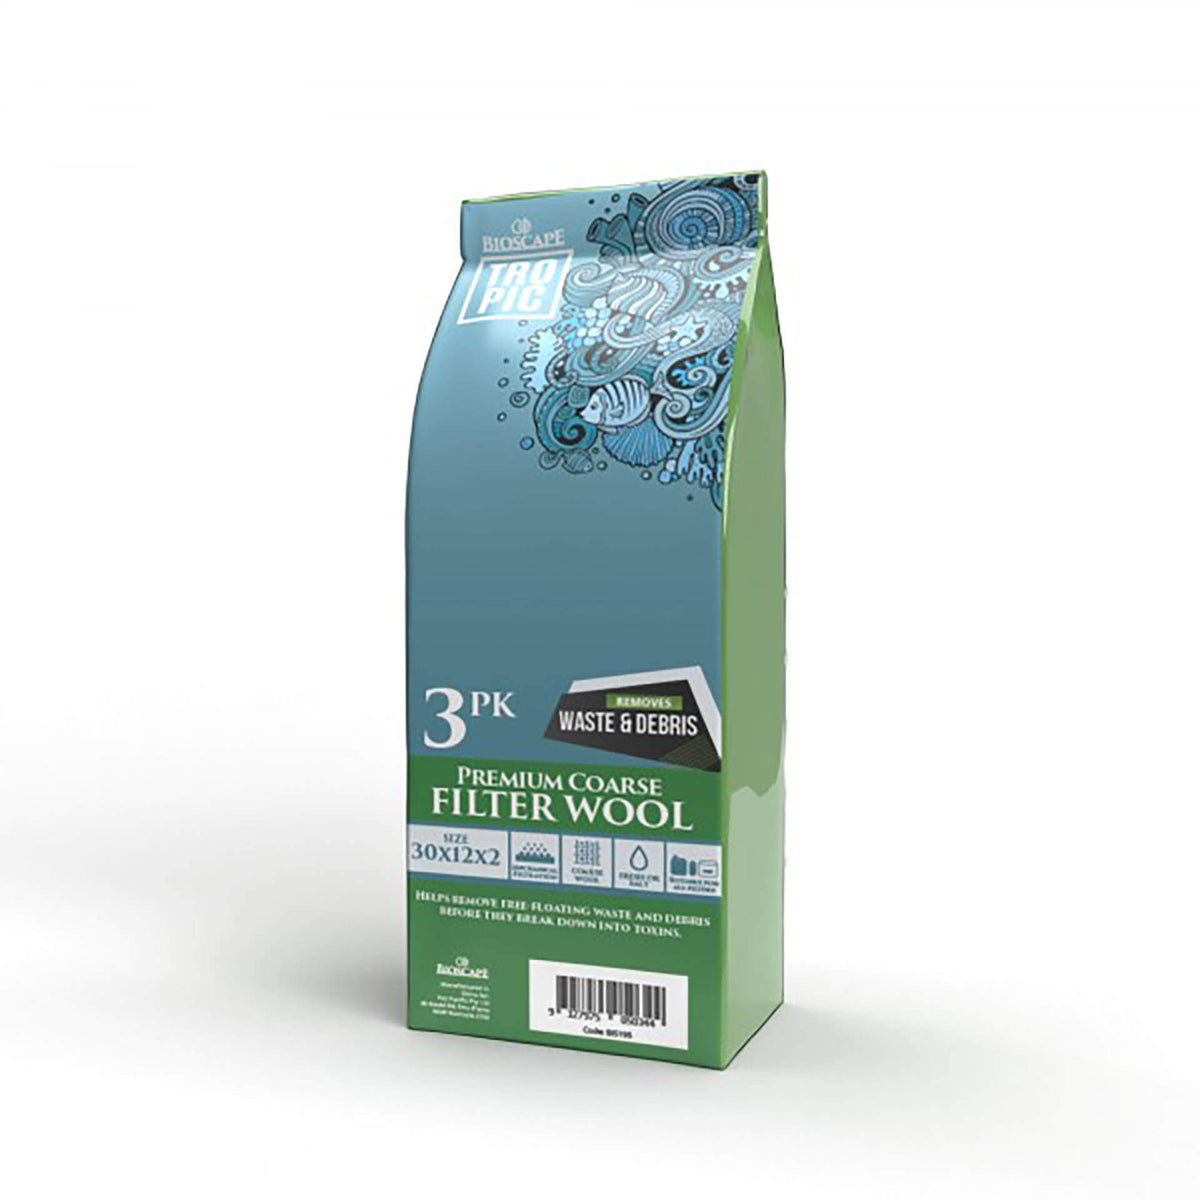 Bioscape Premium Coarse Filter Wool - 32 x 12 x 02cm Blue Sheets - Pack of 3